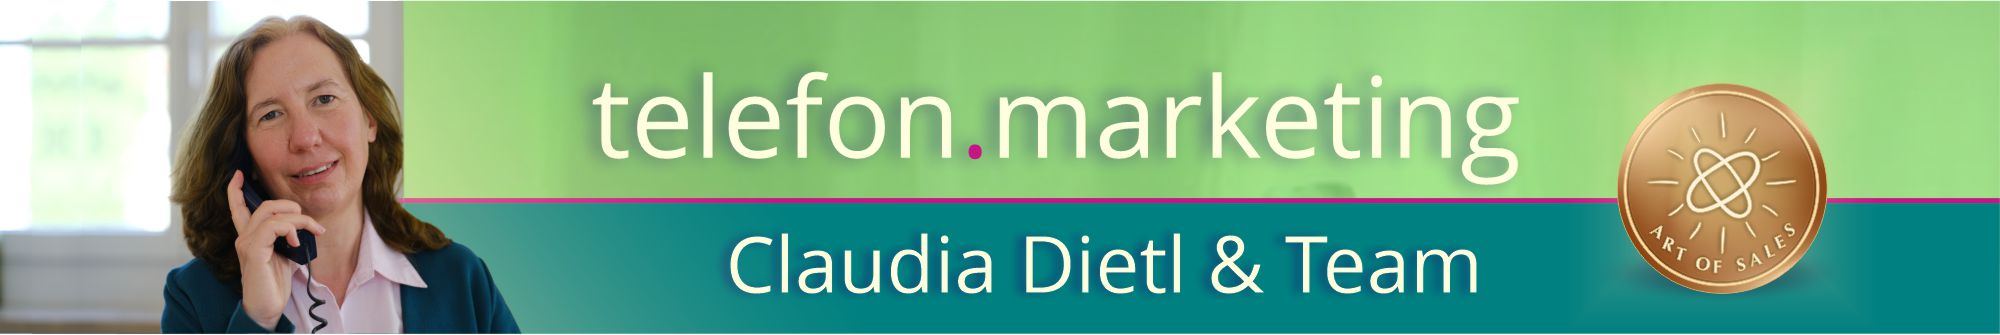 Claudia Dietl - telefon.marketing